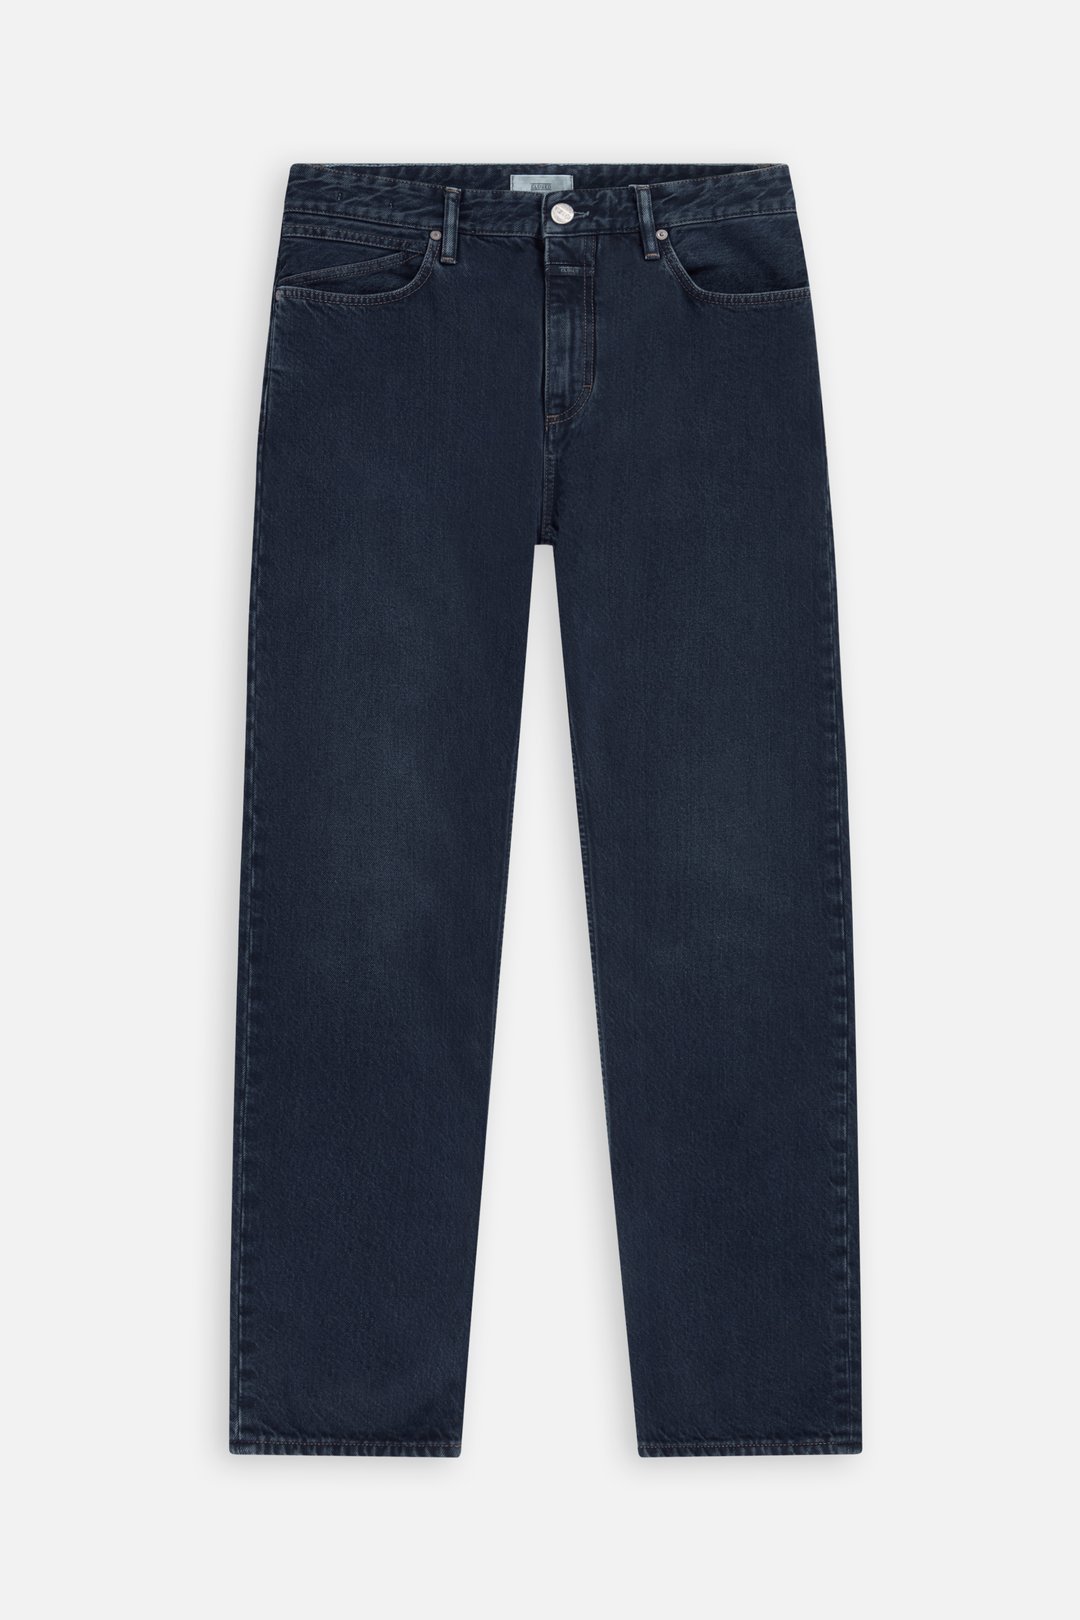 Amc straight jeans MEN FASHION Jeans Basic discount 78% Navy Blue 40                  EU 